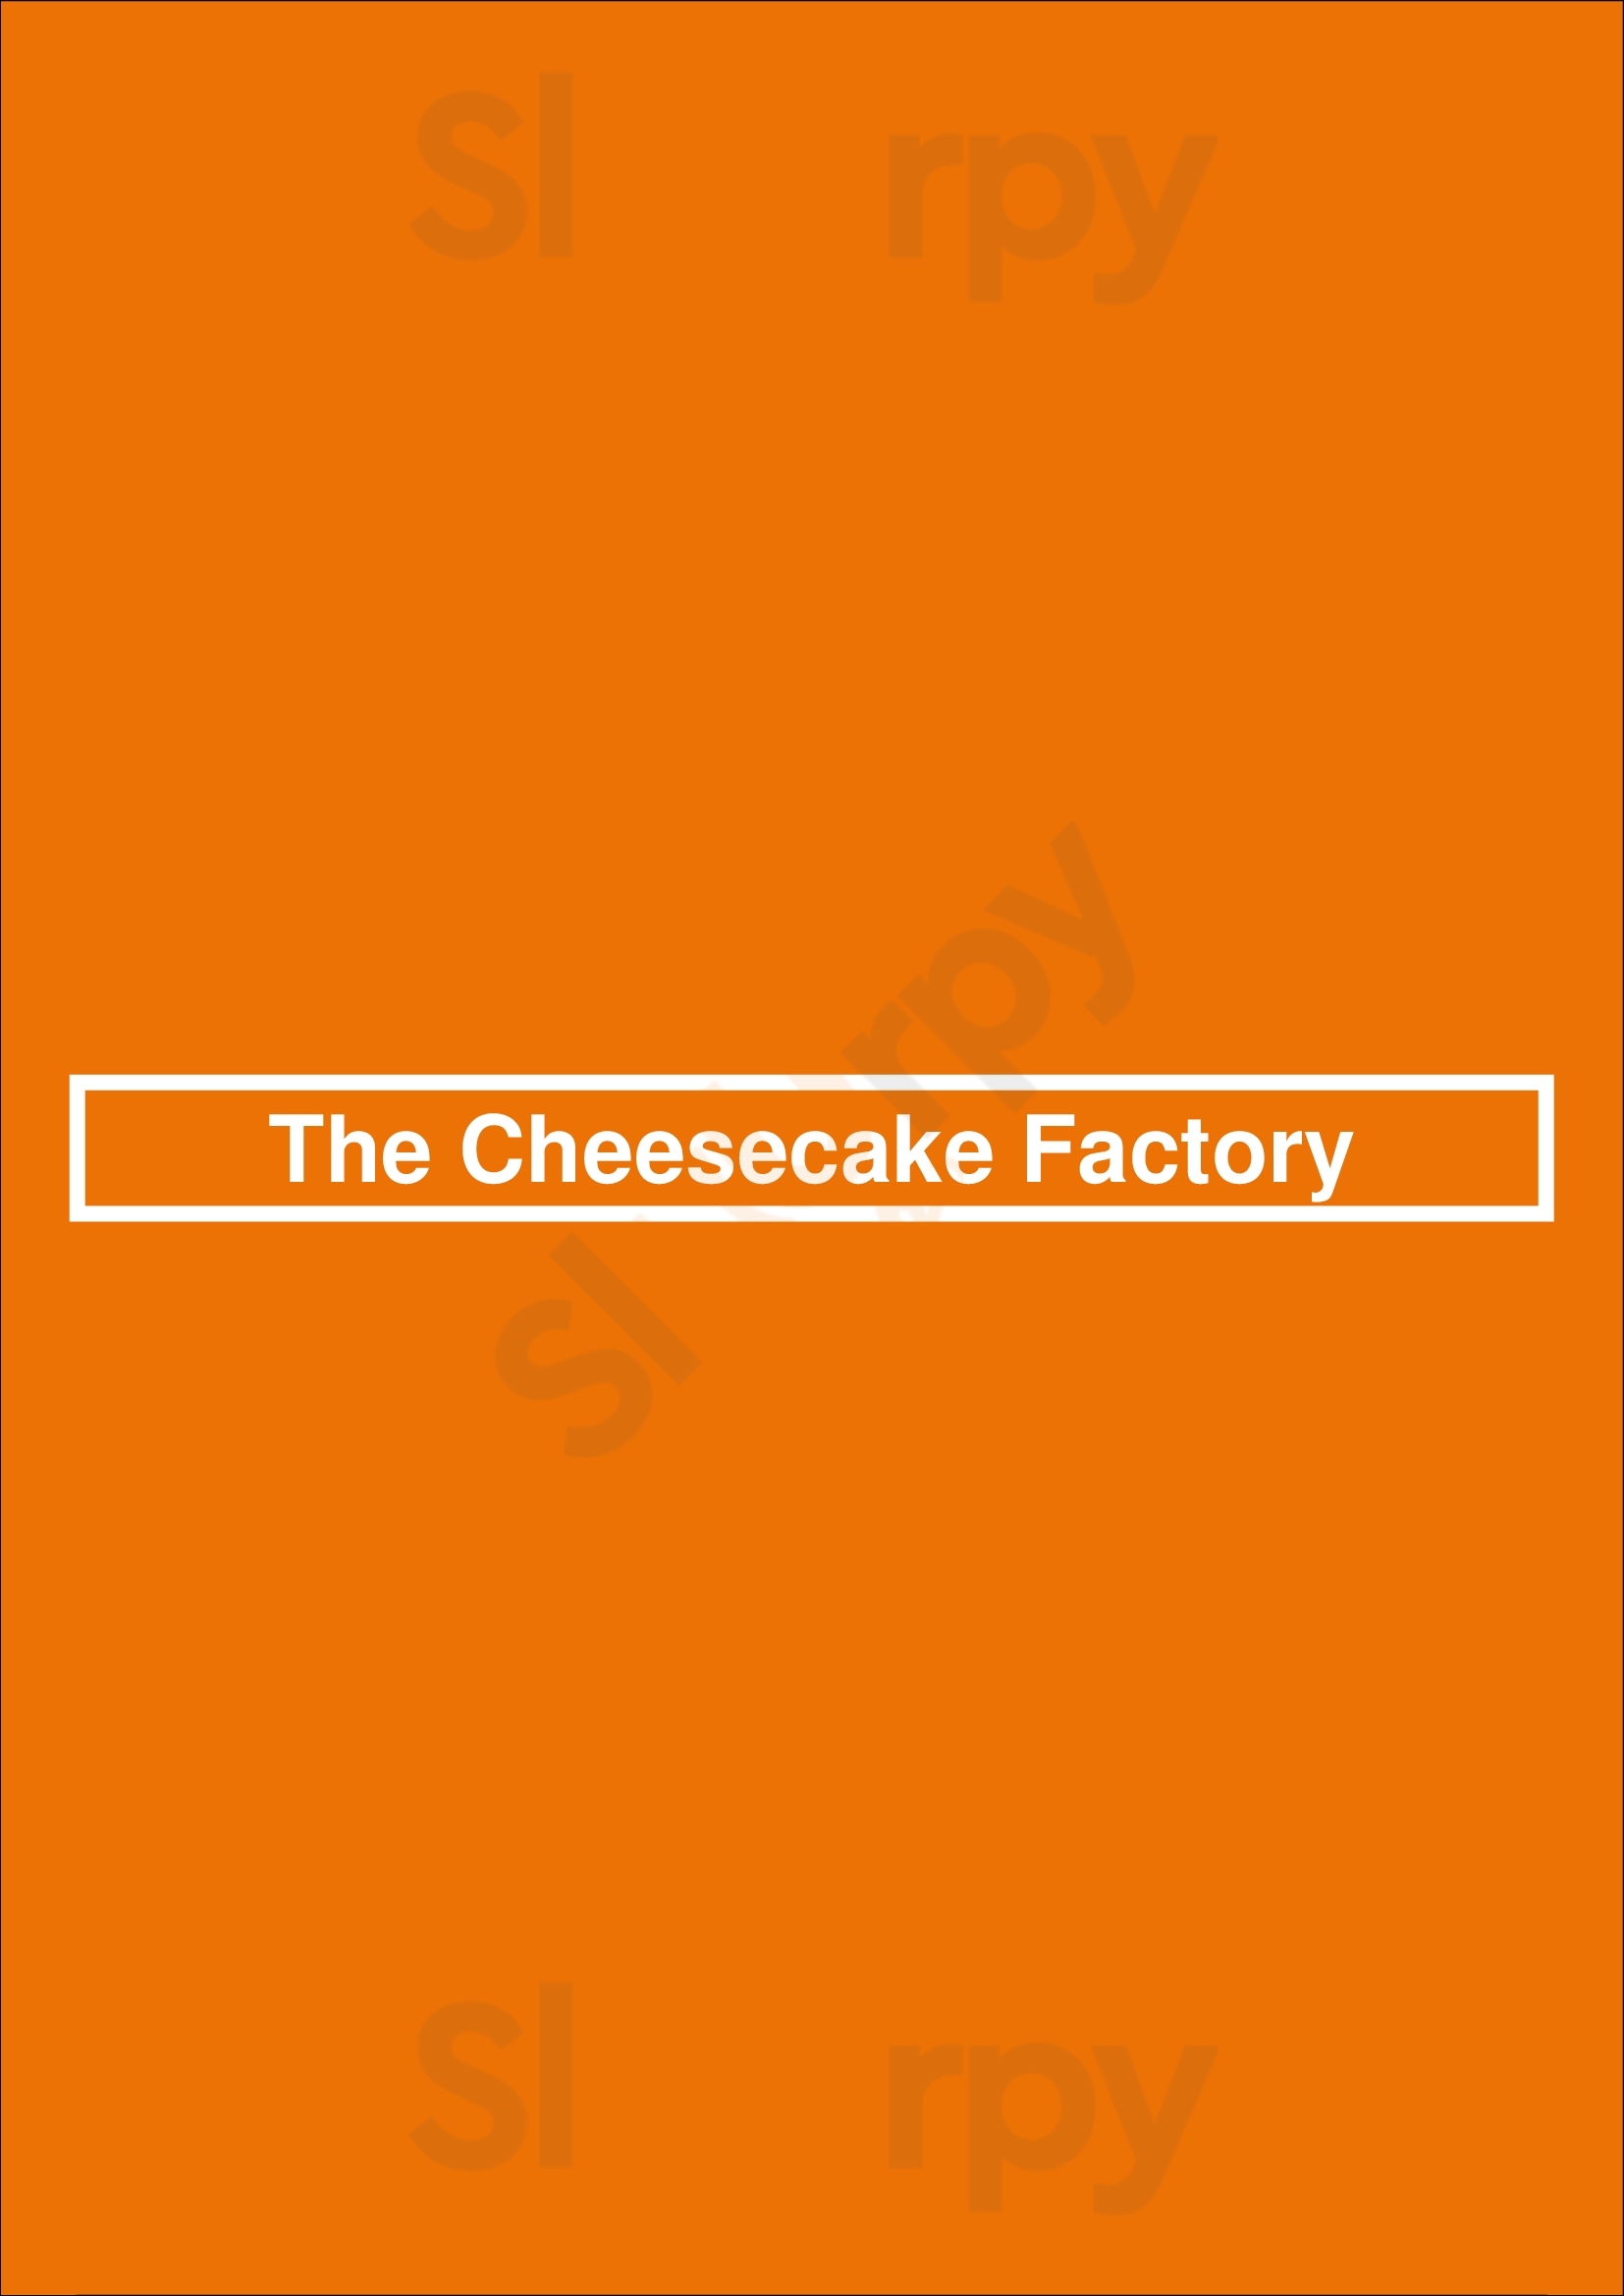 The Cheesecake Factory Pittsburgh Menu - 1